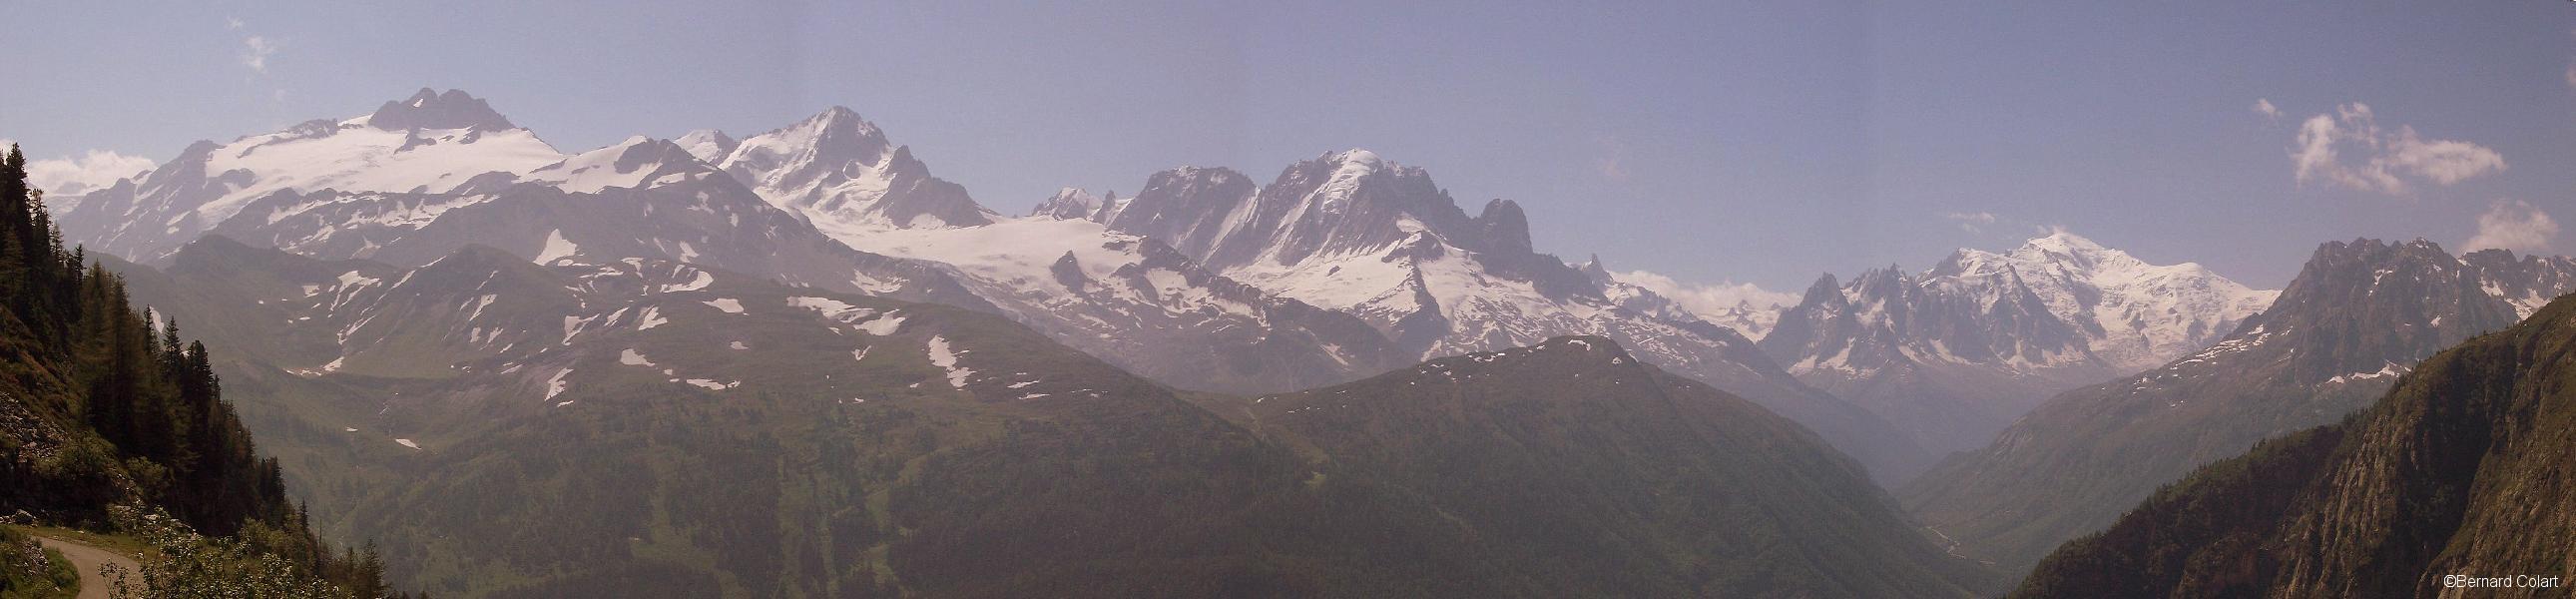 La chaîne du Mont Blanc